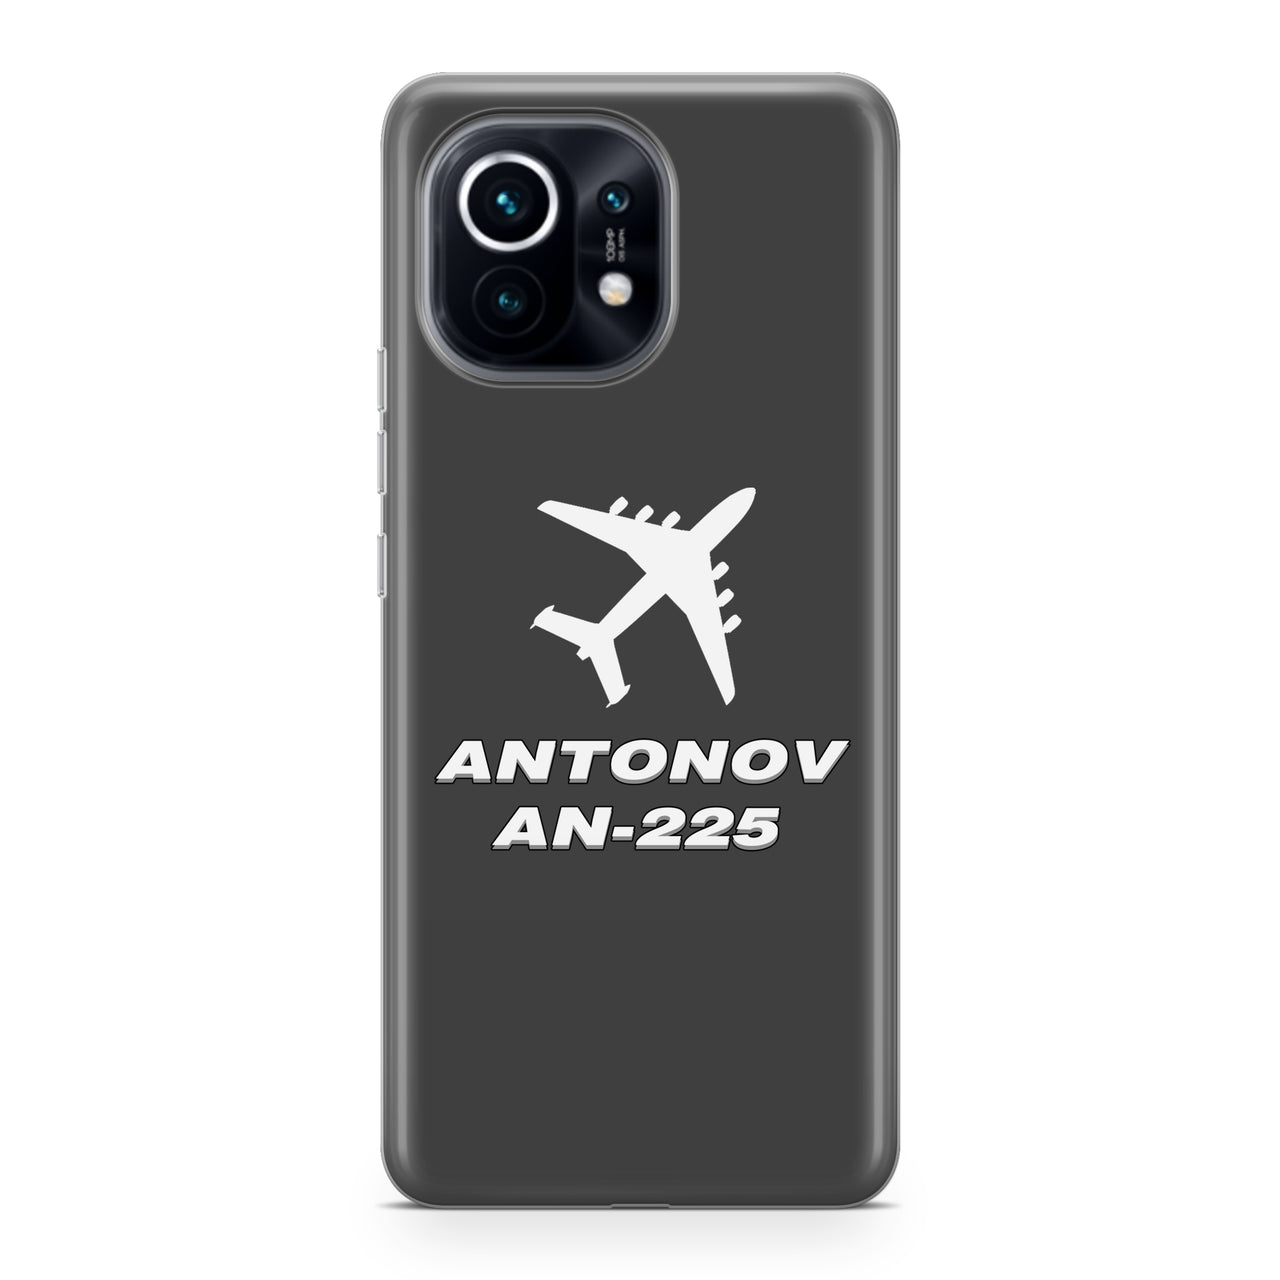 Antonov AN-225 (28) Designed Xiaomi Cases